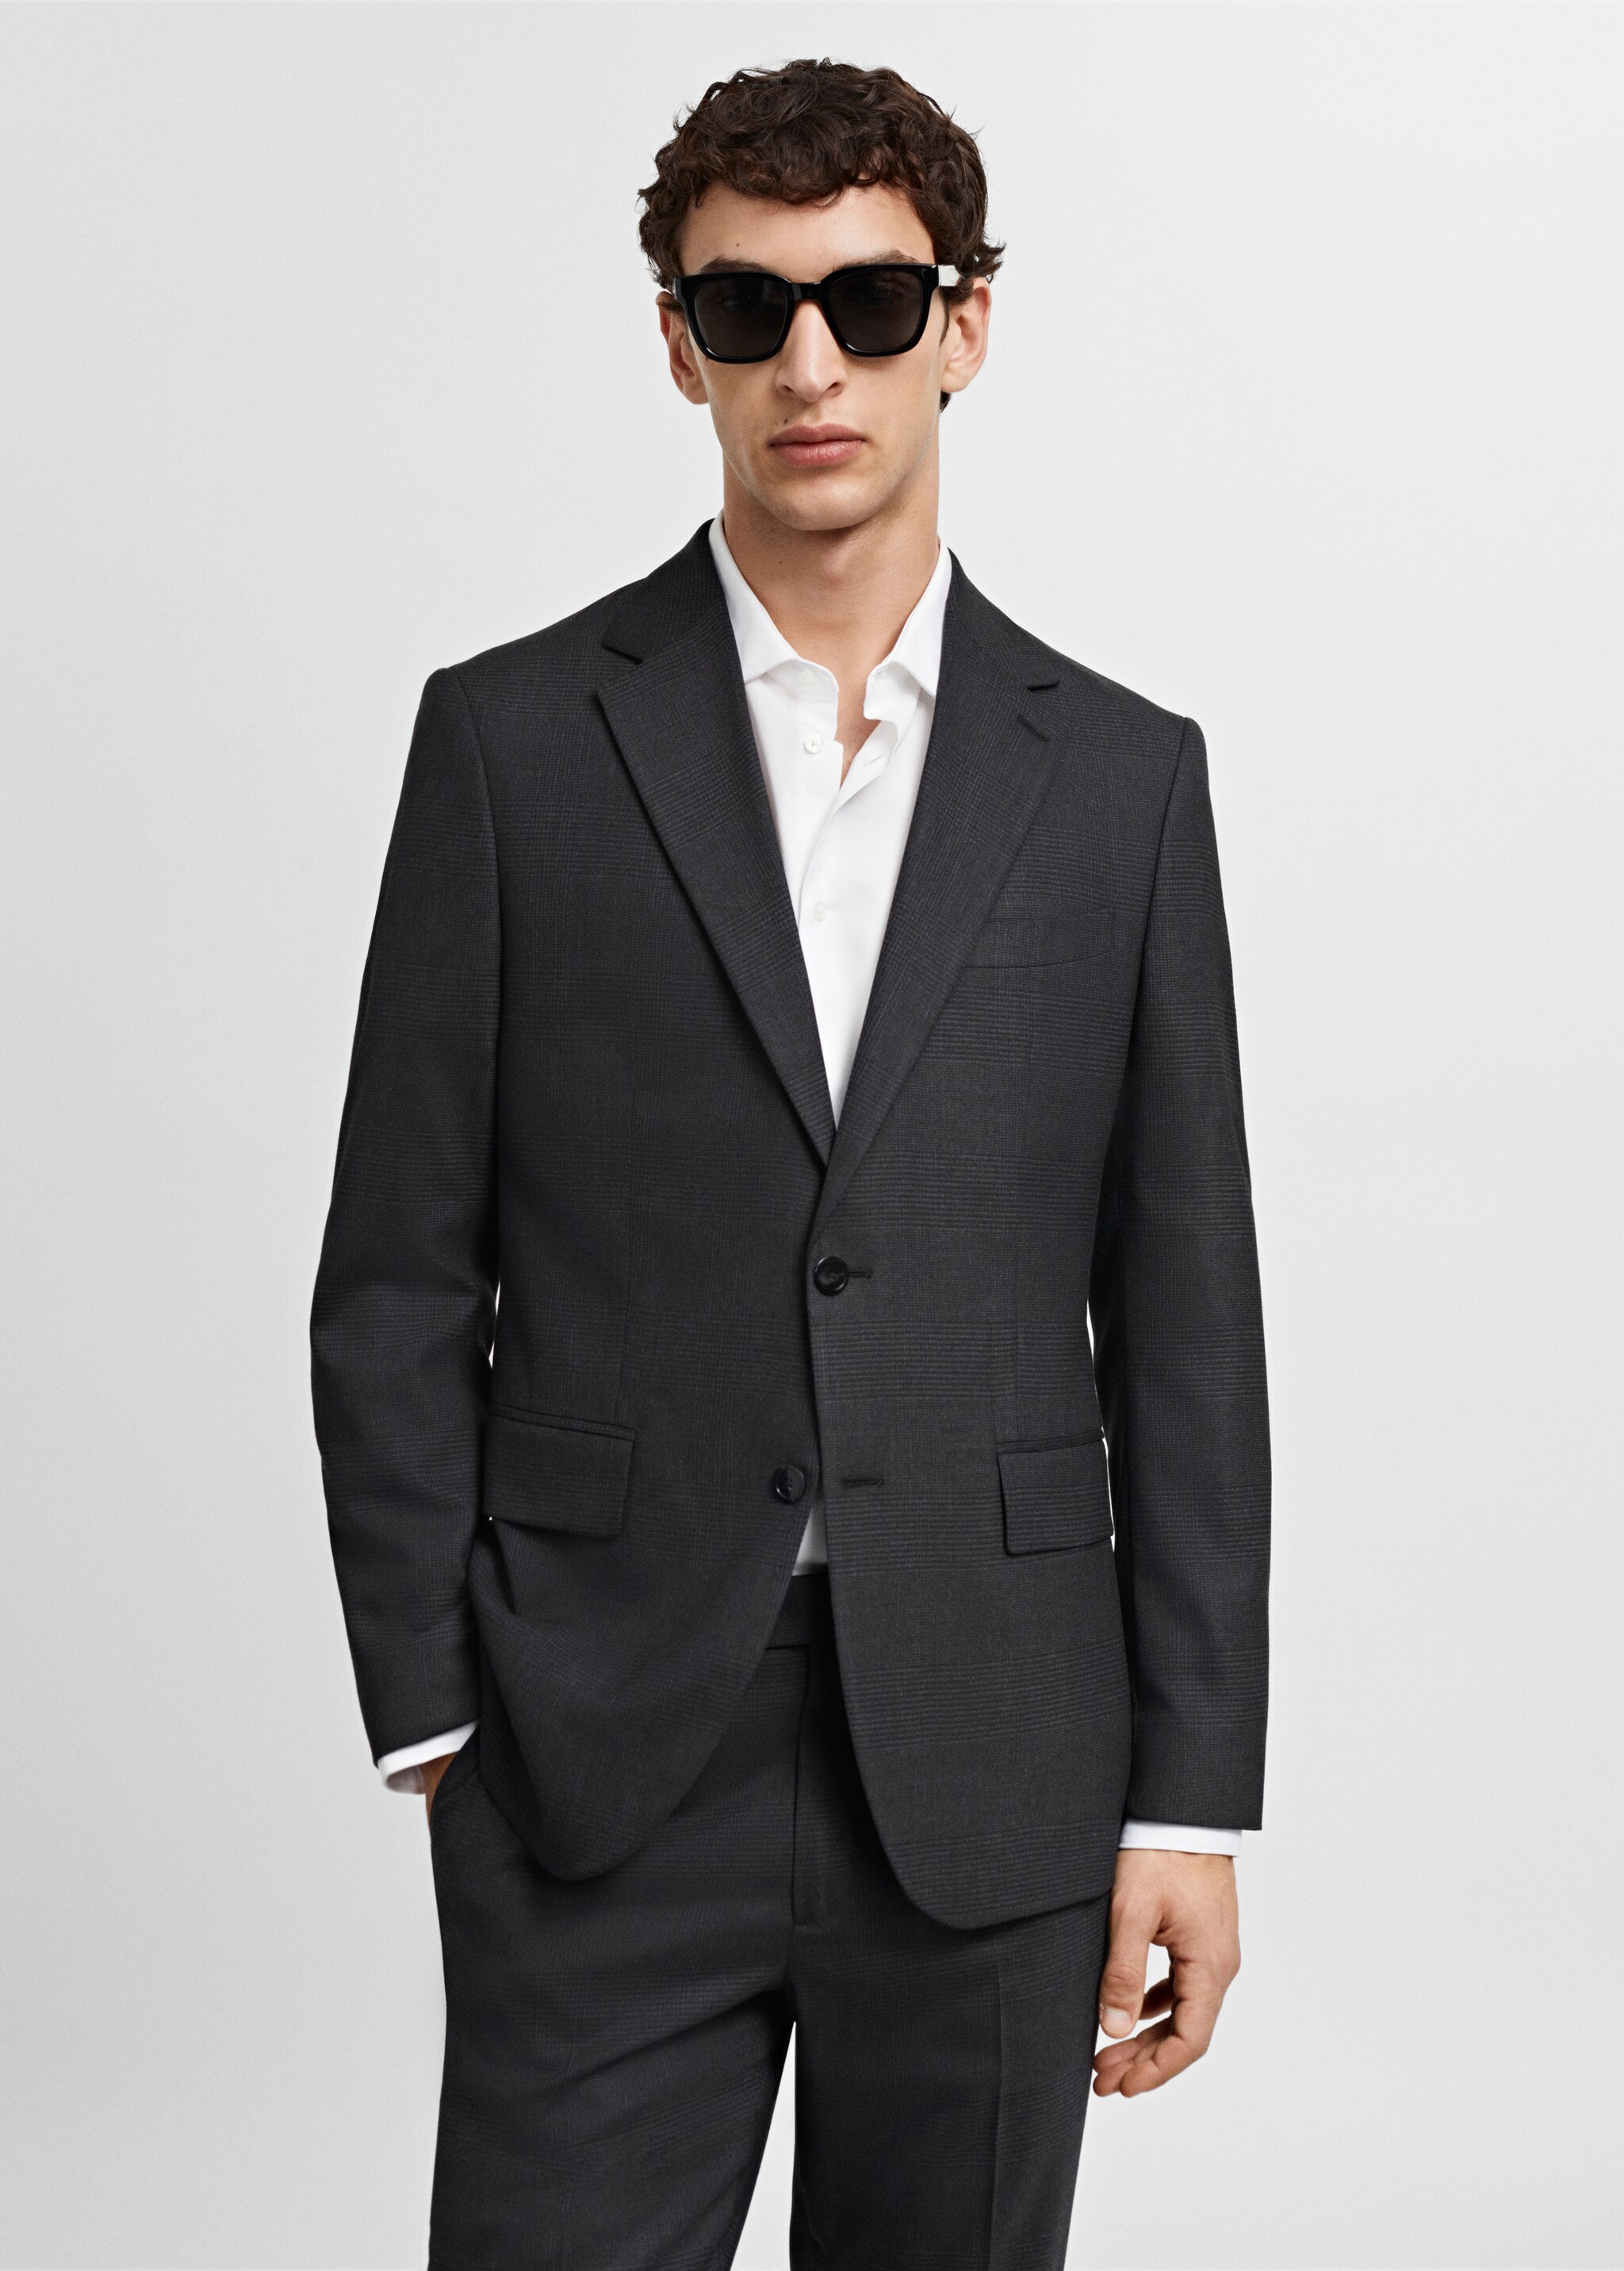 Slim fit cold wool suit jacket - Medium plane